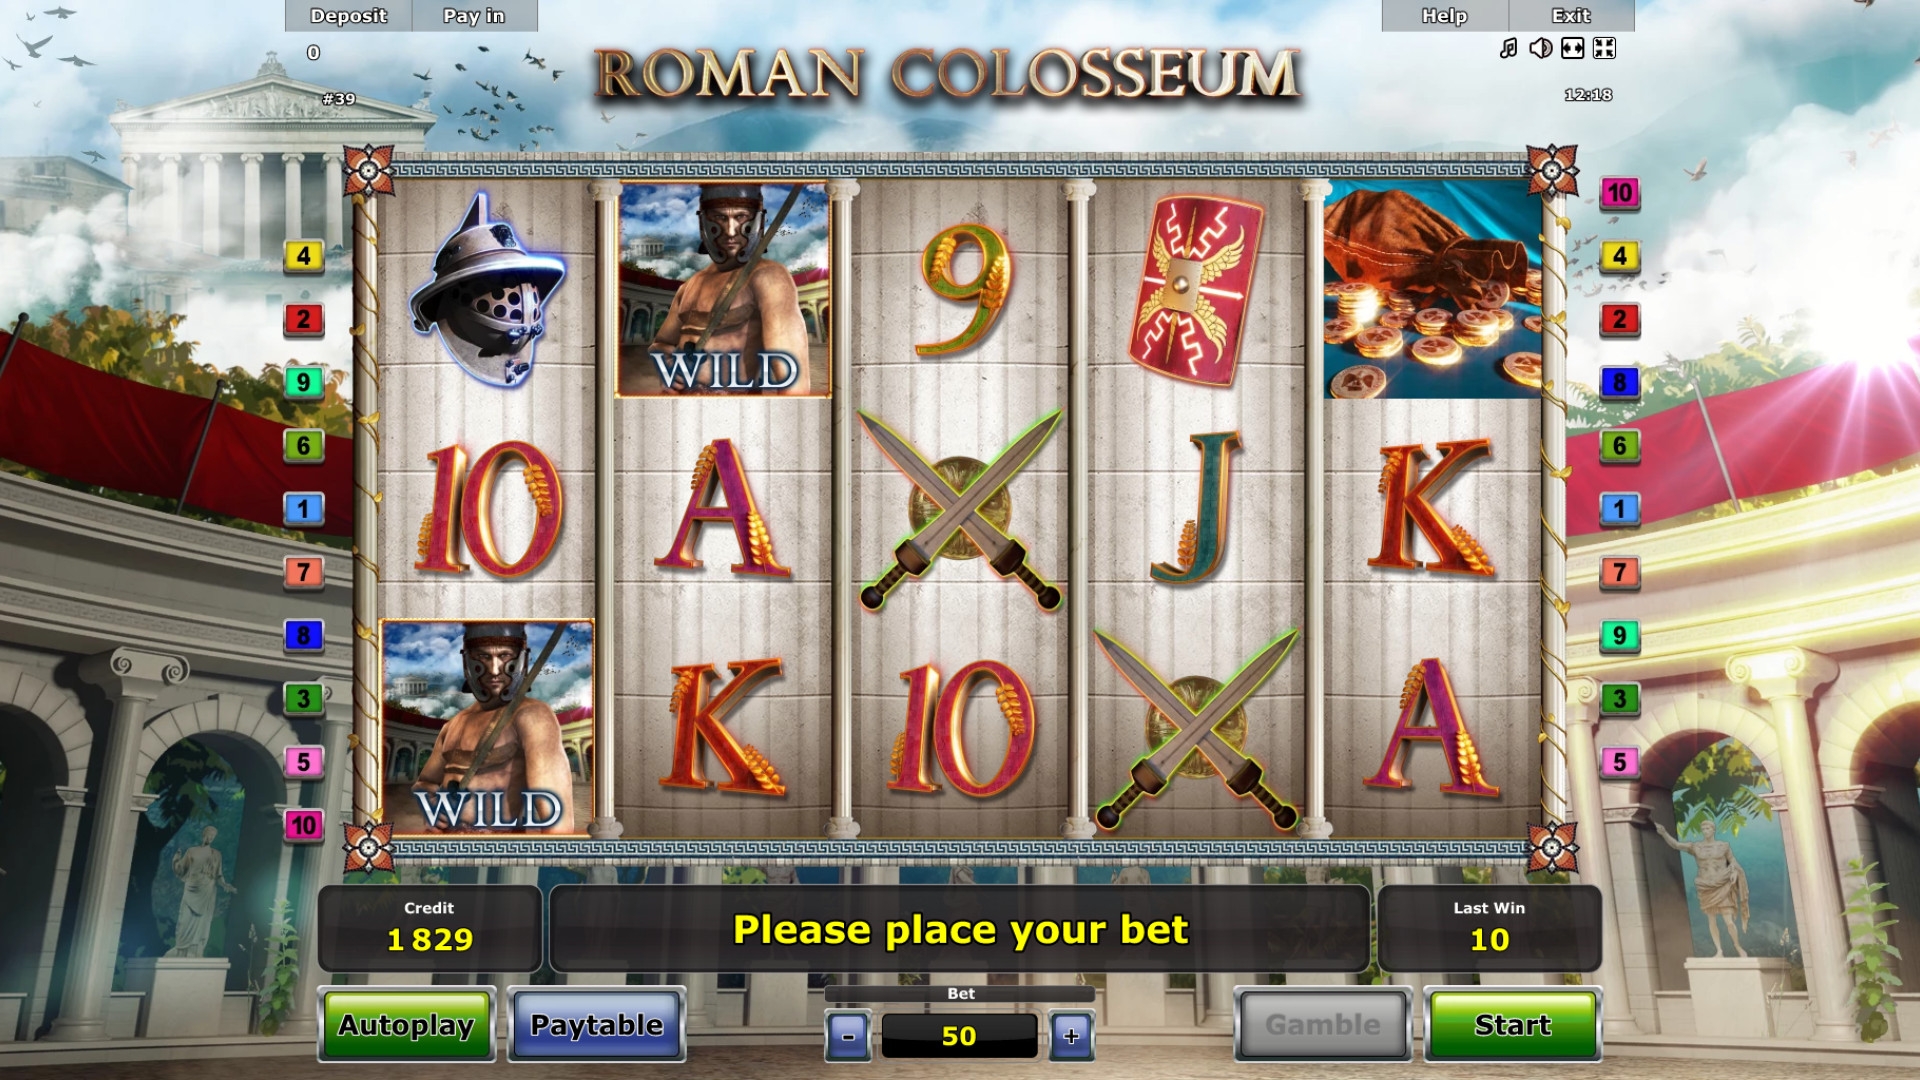 Roman Colosseum (Roman Colosseum) from category Slots